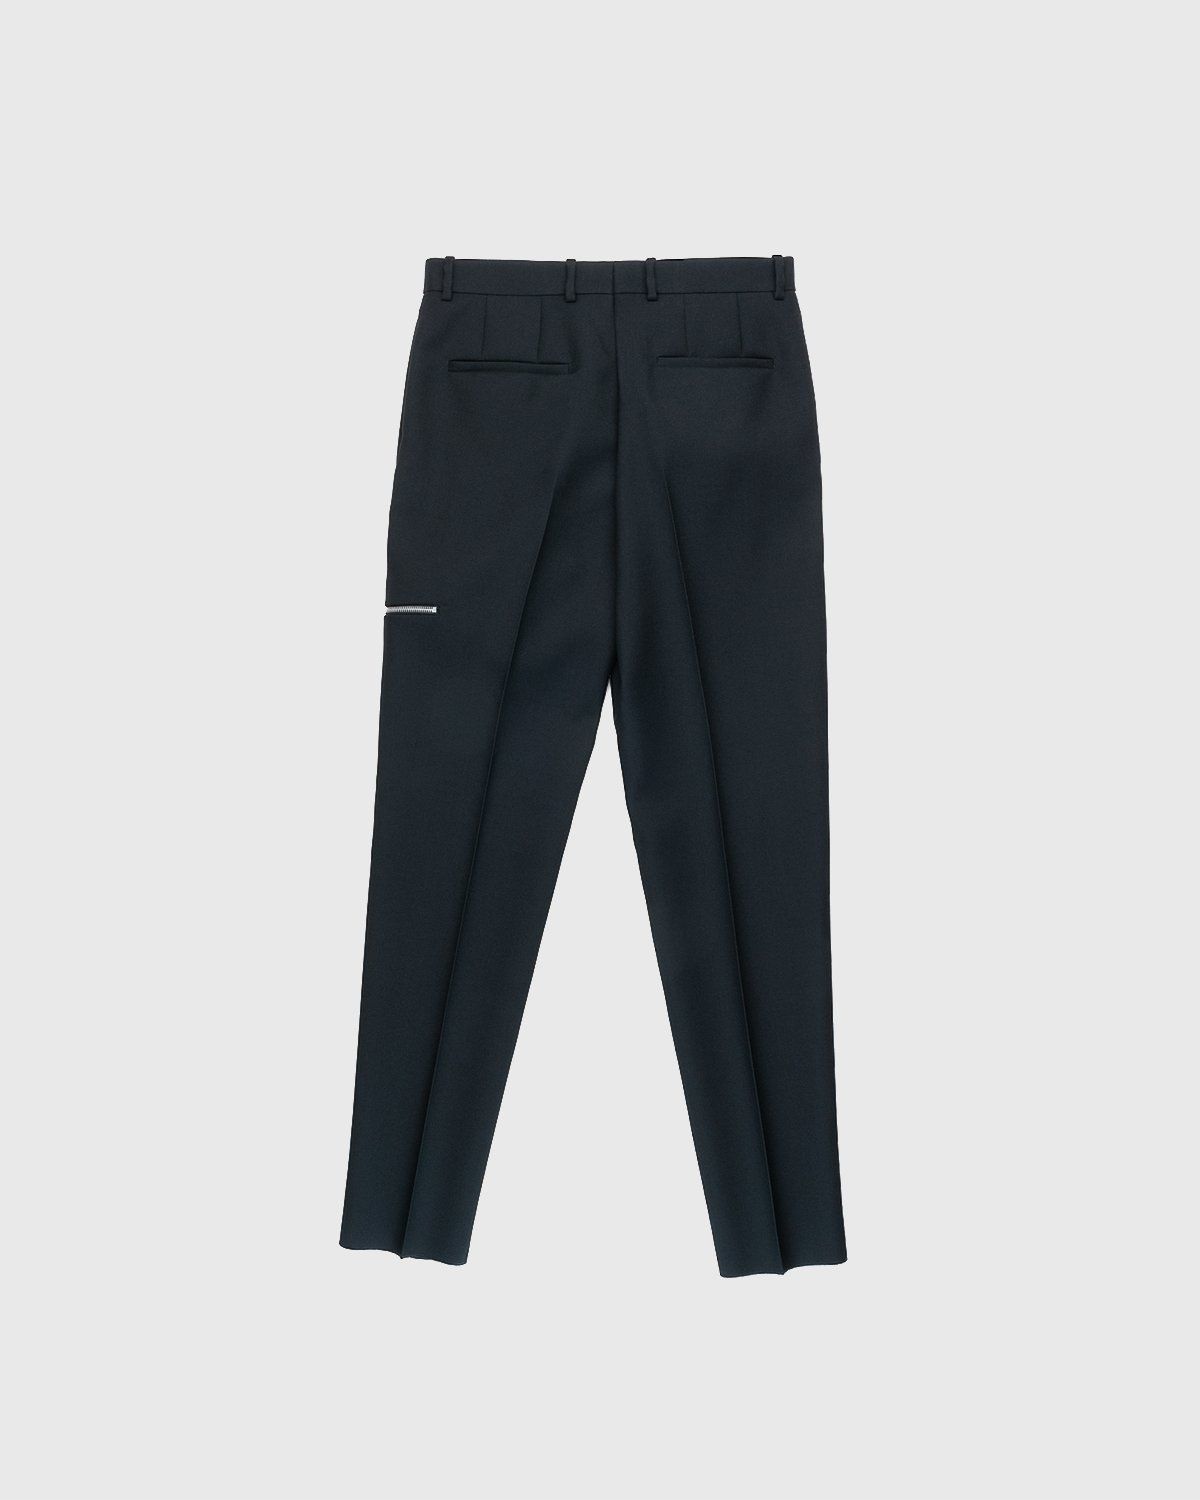 Jil Sander – Zip Pocket Trousers Black - Trousers - Black - Image 2